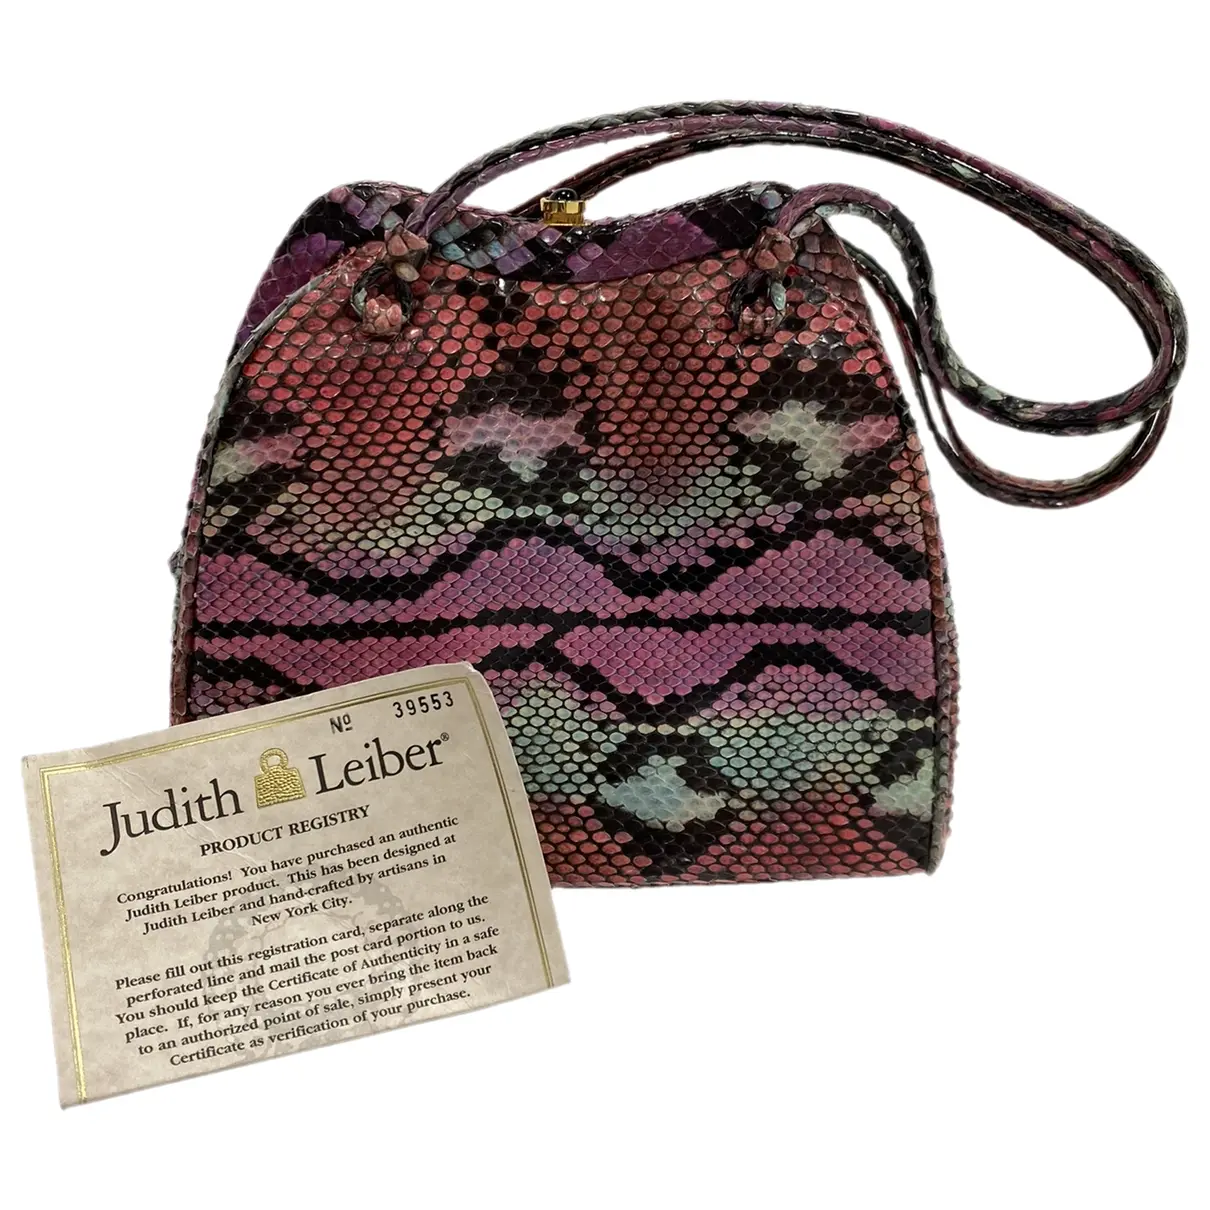 Exotic leathers mini bag Judith Leiber